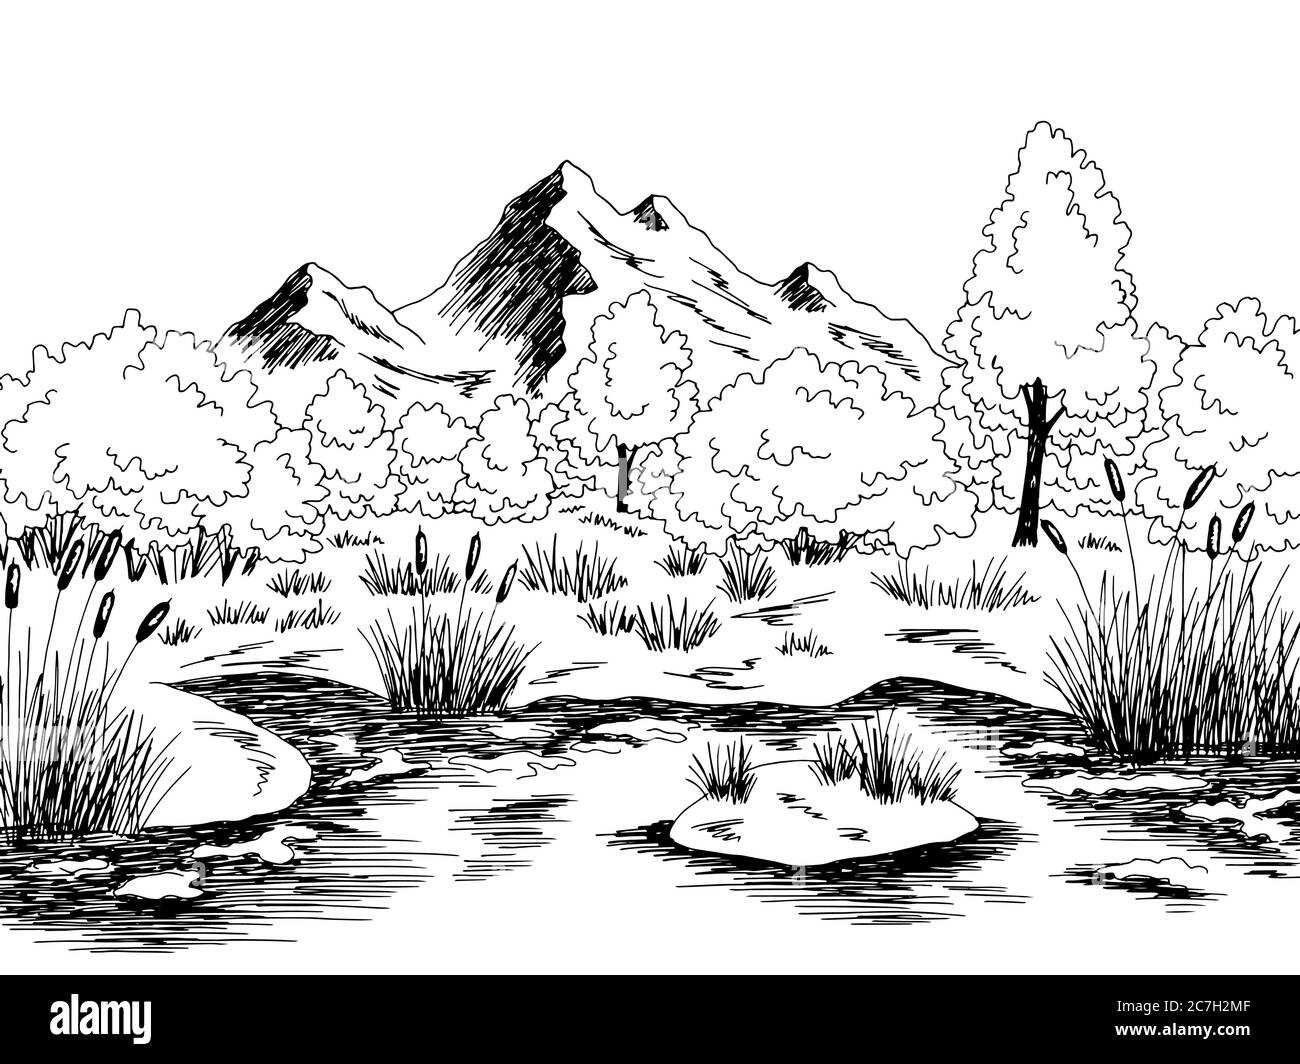 Moor Sumpf Grafik schwarz weiß Landschaft Skizze Illustration Vektor Stock Vektor